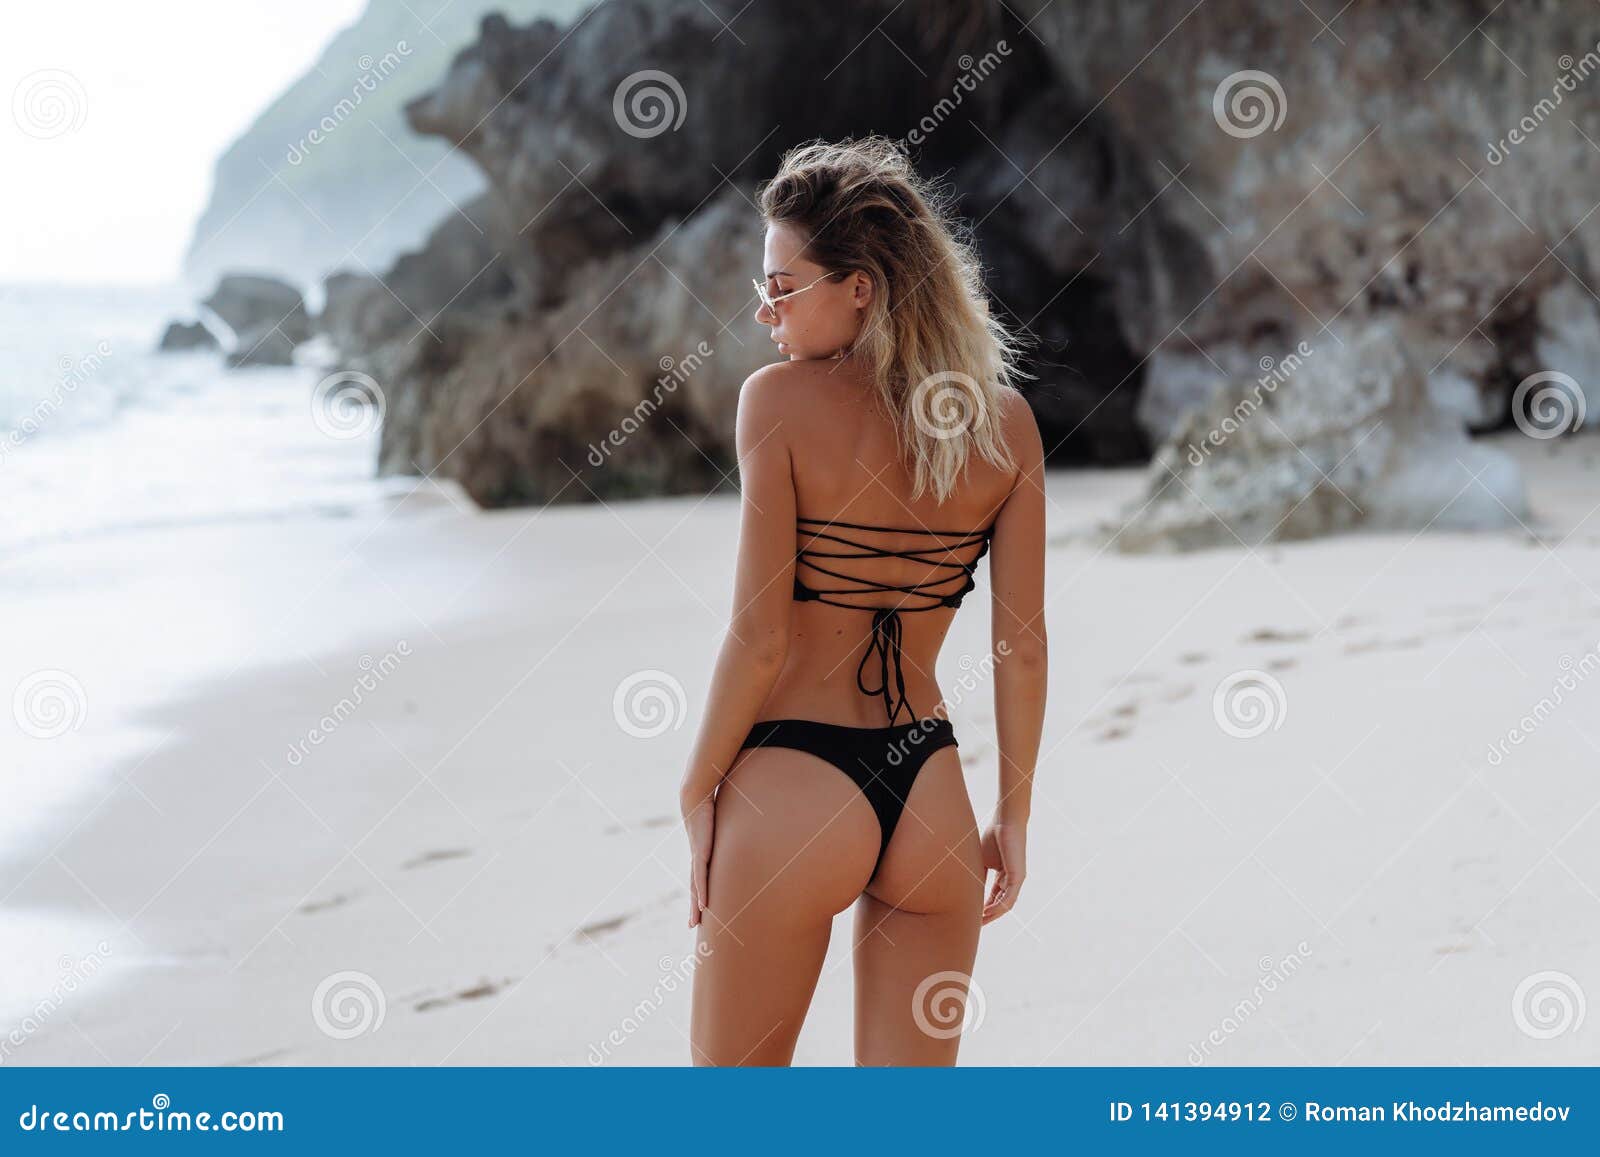 ulæselig Utrolig Kantine Backside View of Girl with Booty in Black Bikini Resting on Deserted Beach  Stock Photo - Image of beachwear, beautiful: 141394912